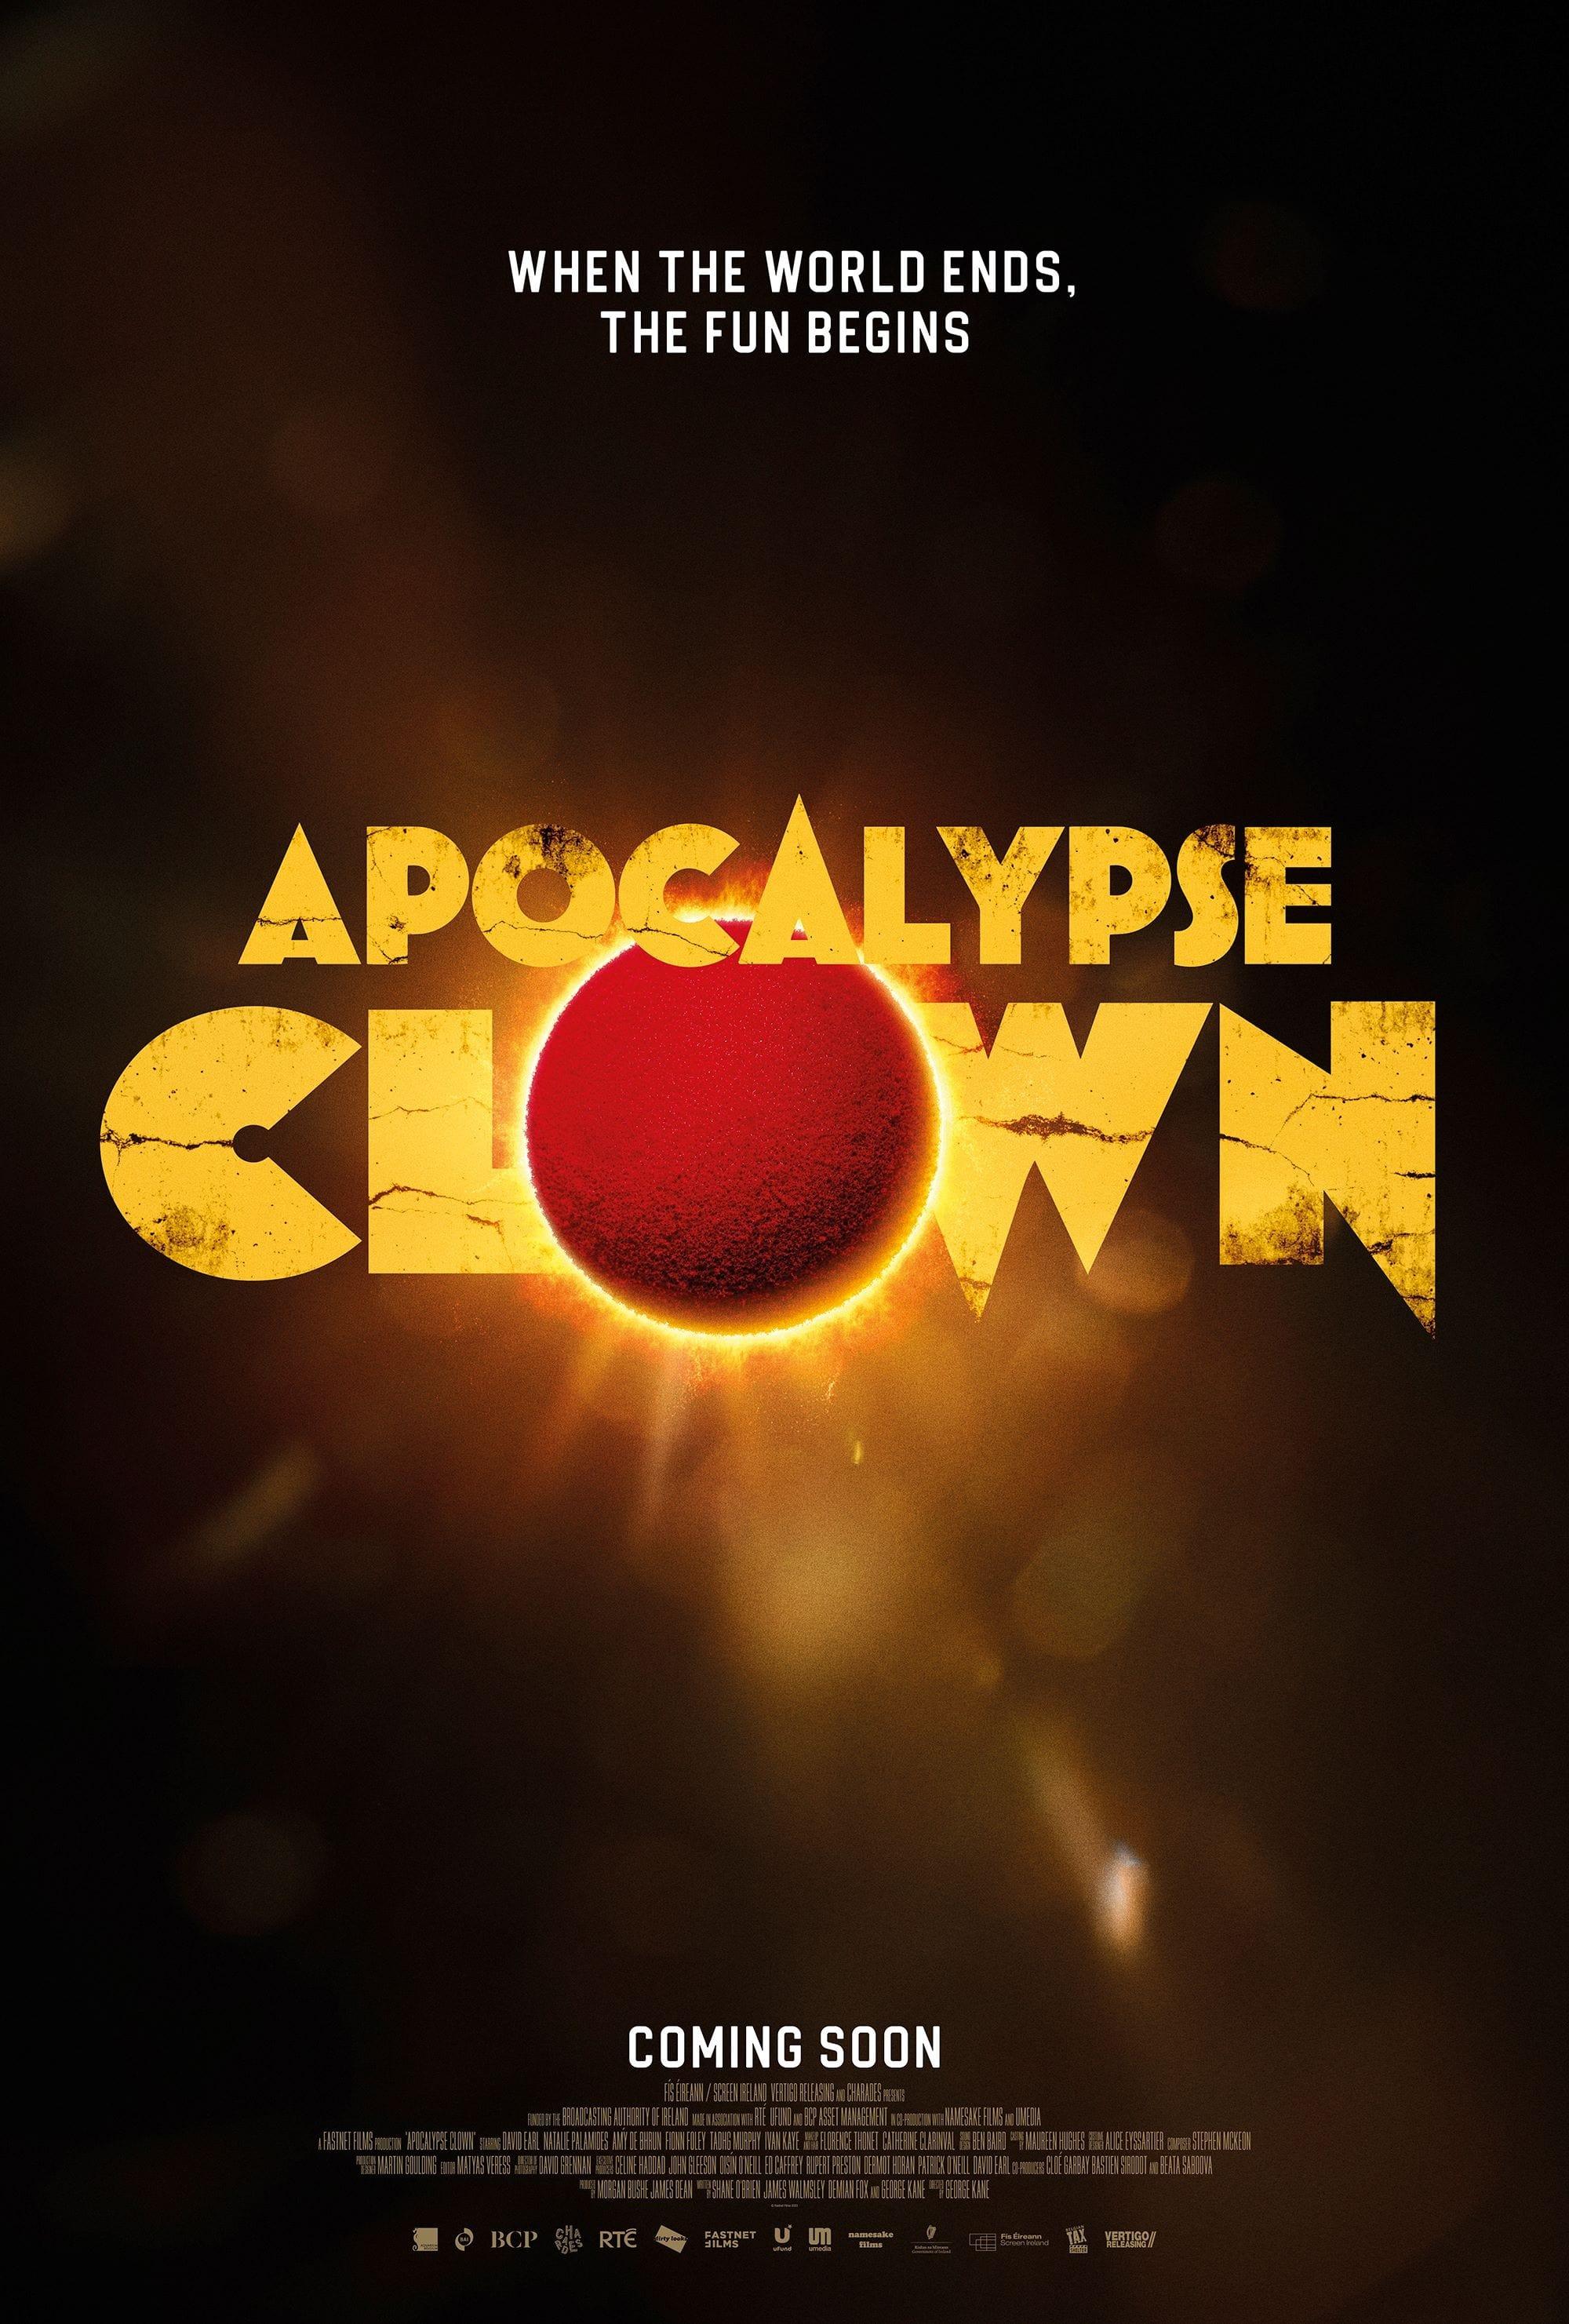 Apocalypse Clown poster